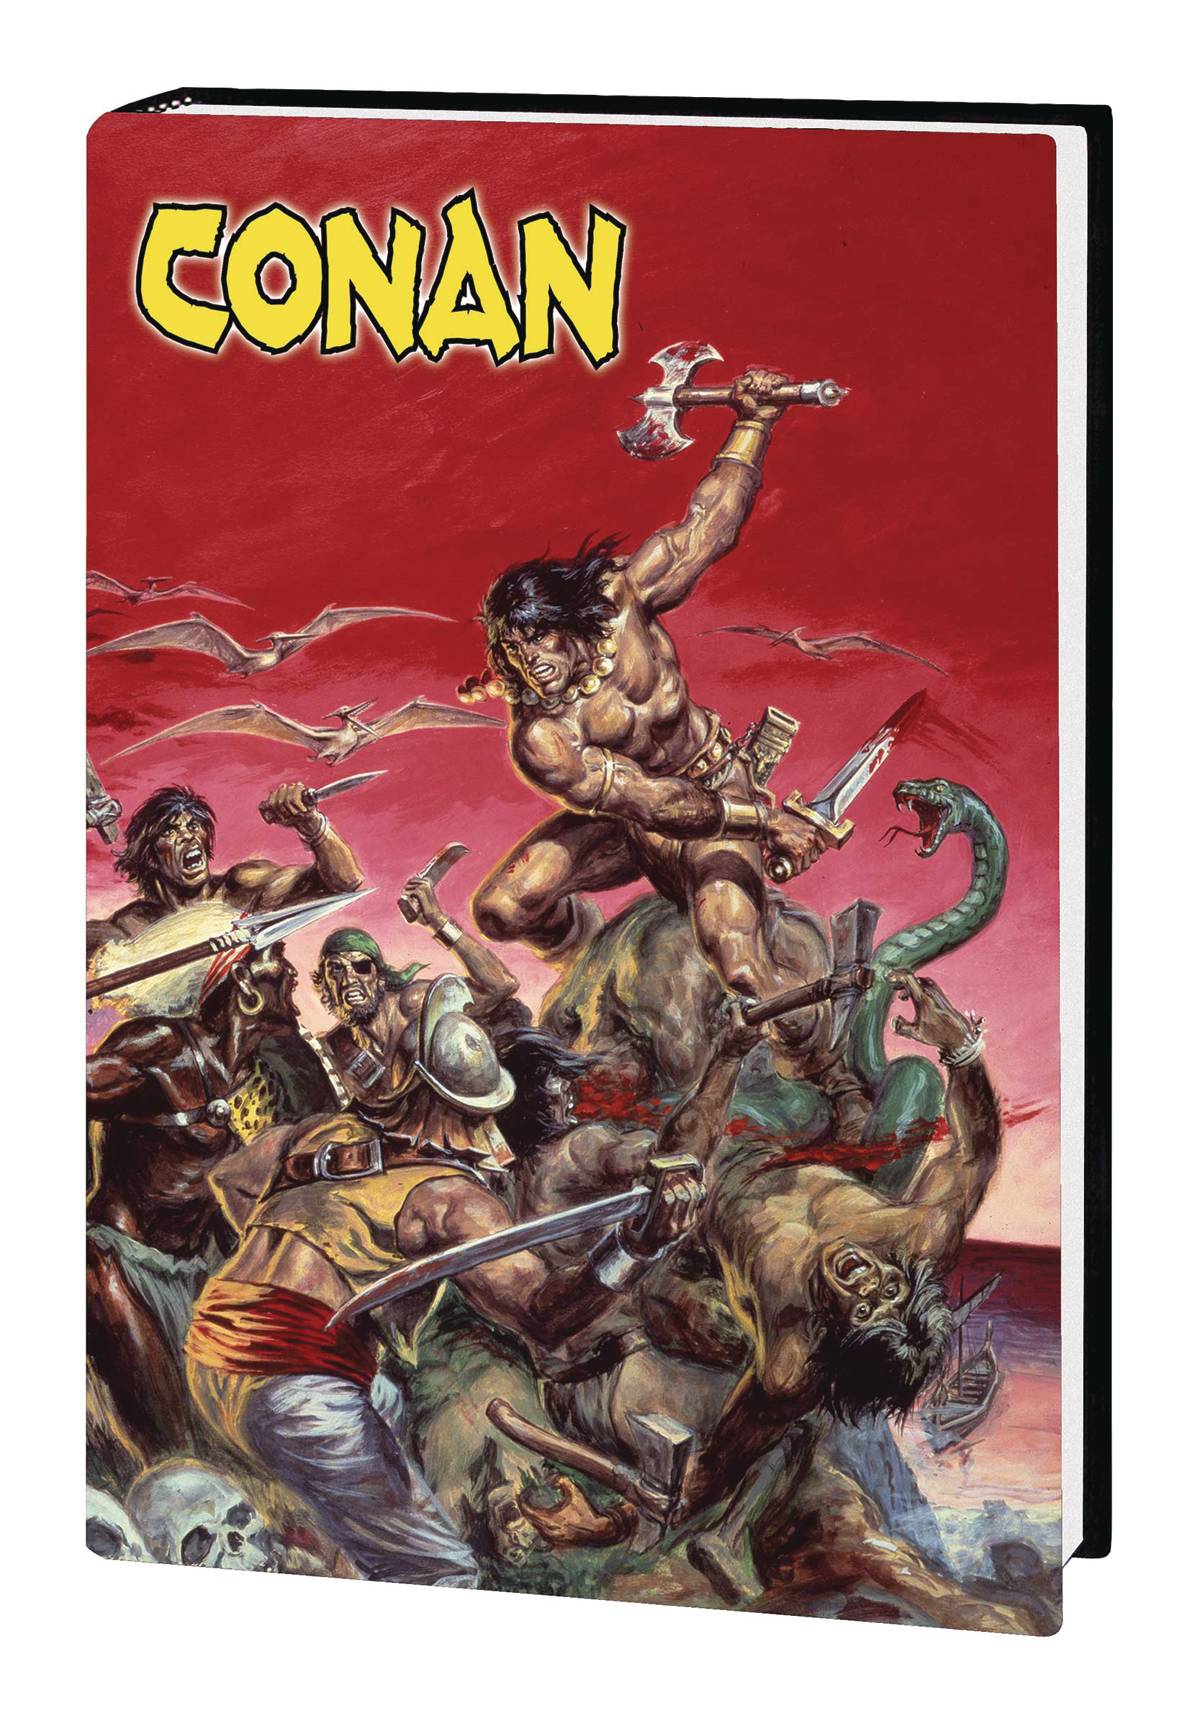 Г конан. Конан киммериец комикс. Рисунки художника Earl norem. Conan Marvel. Conan Barbarian book Art.